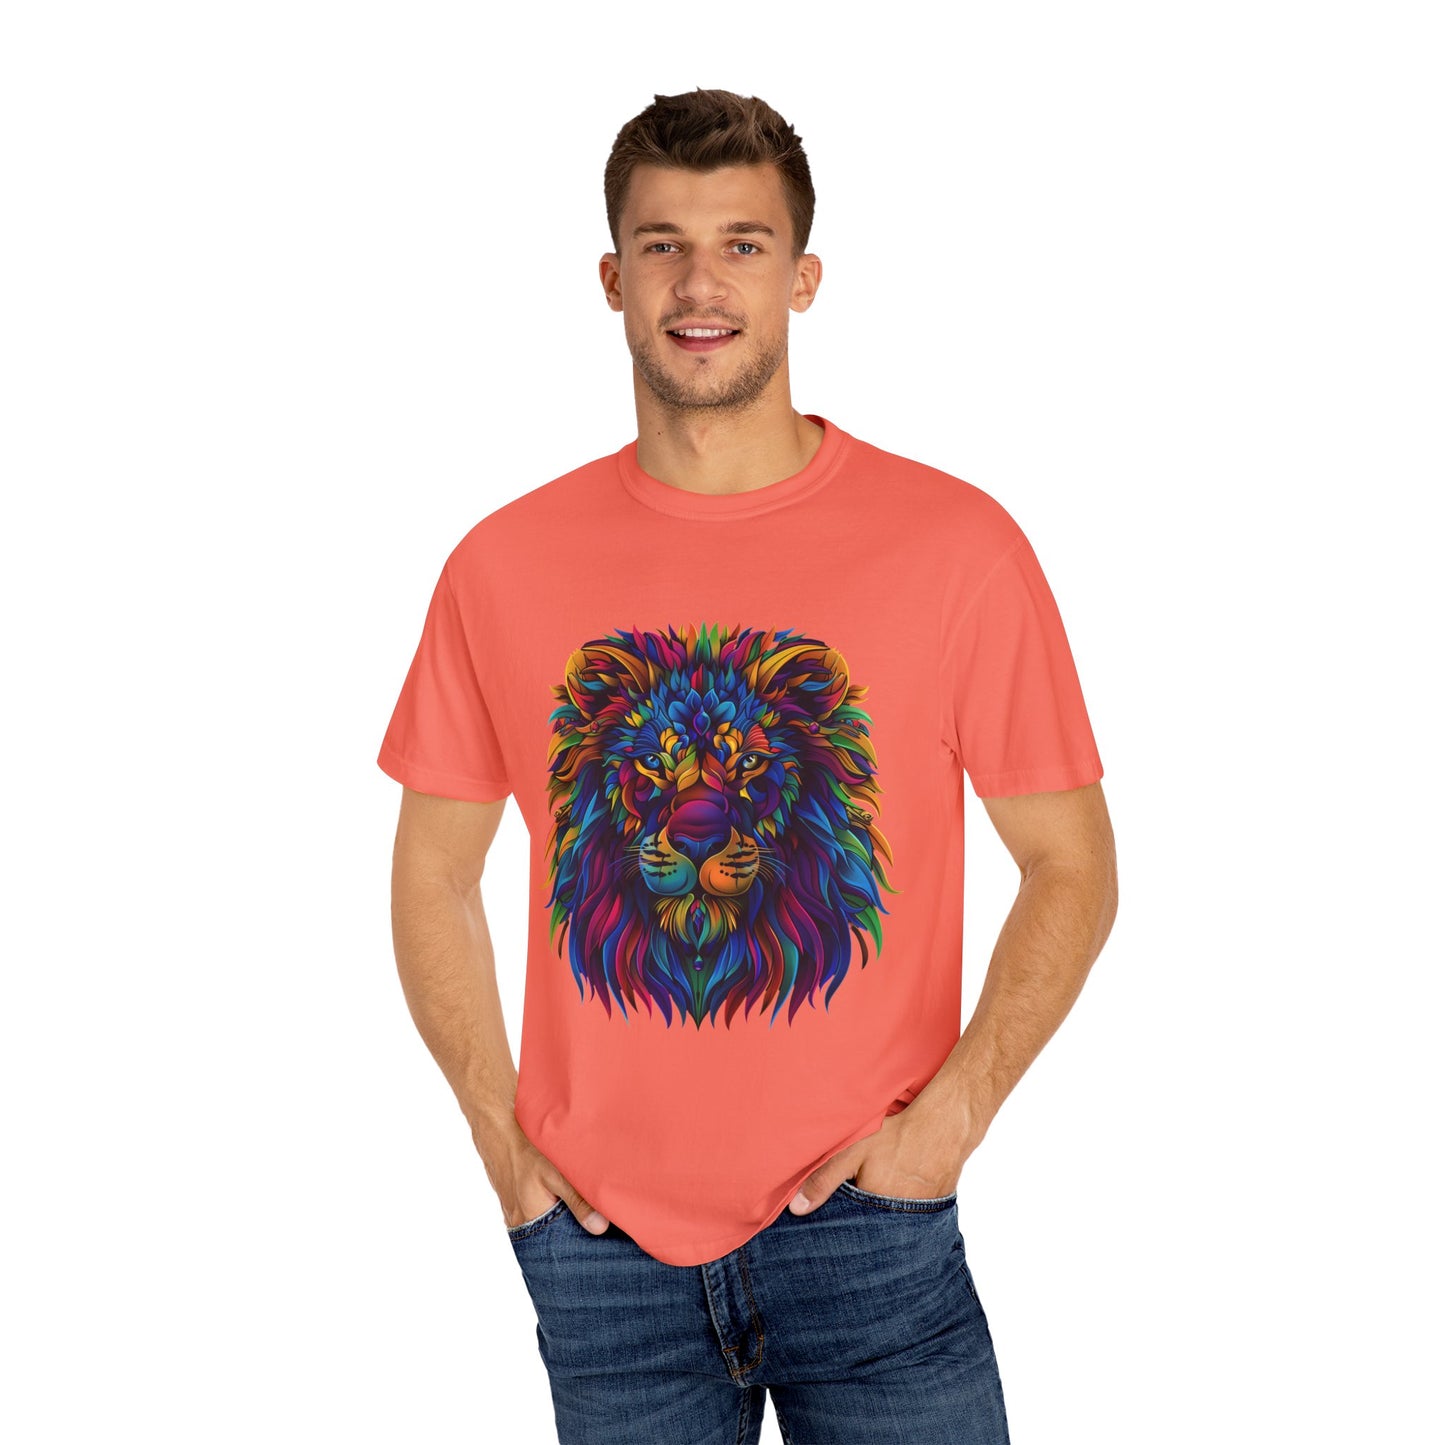 Lion Head Cool Graphic Design Novelty Unisex Garment-dyed T-shirt Cotton Funny Humorous Graphic Soft Premium Unisex Men Women Bright Salmon T-shirt Birthday Gift-33